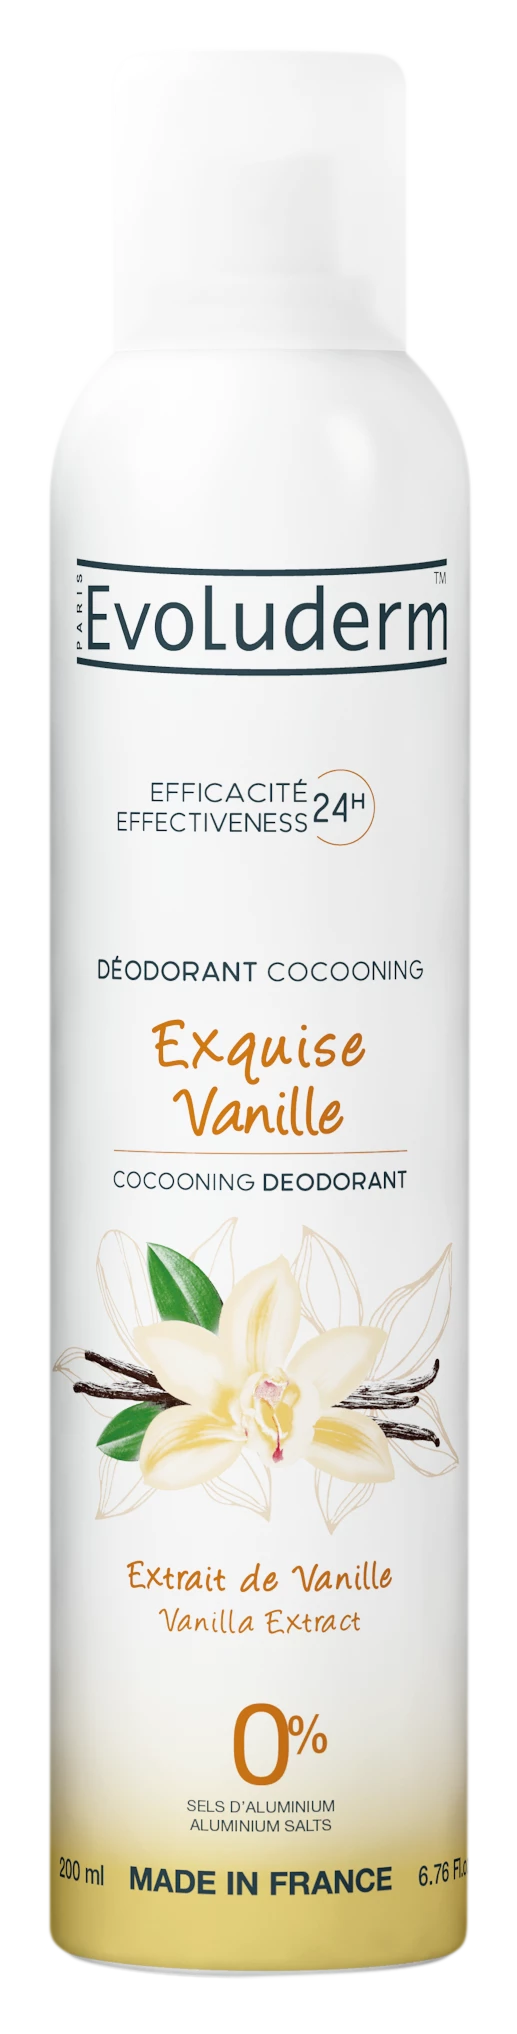 Exquisito Desodorante Vainilla Extracto de Vainilla, 200ml - EVOLUDERM